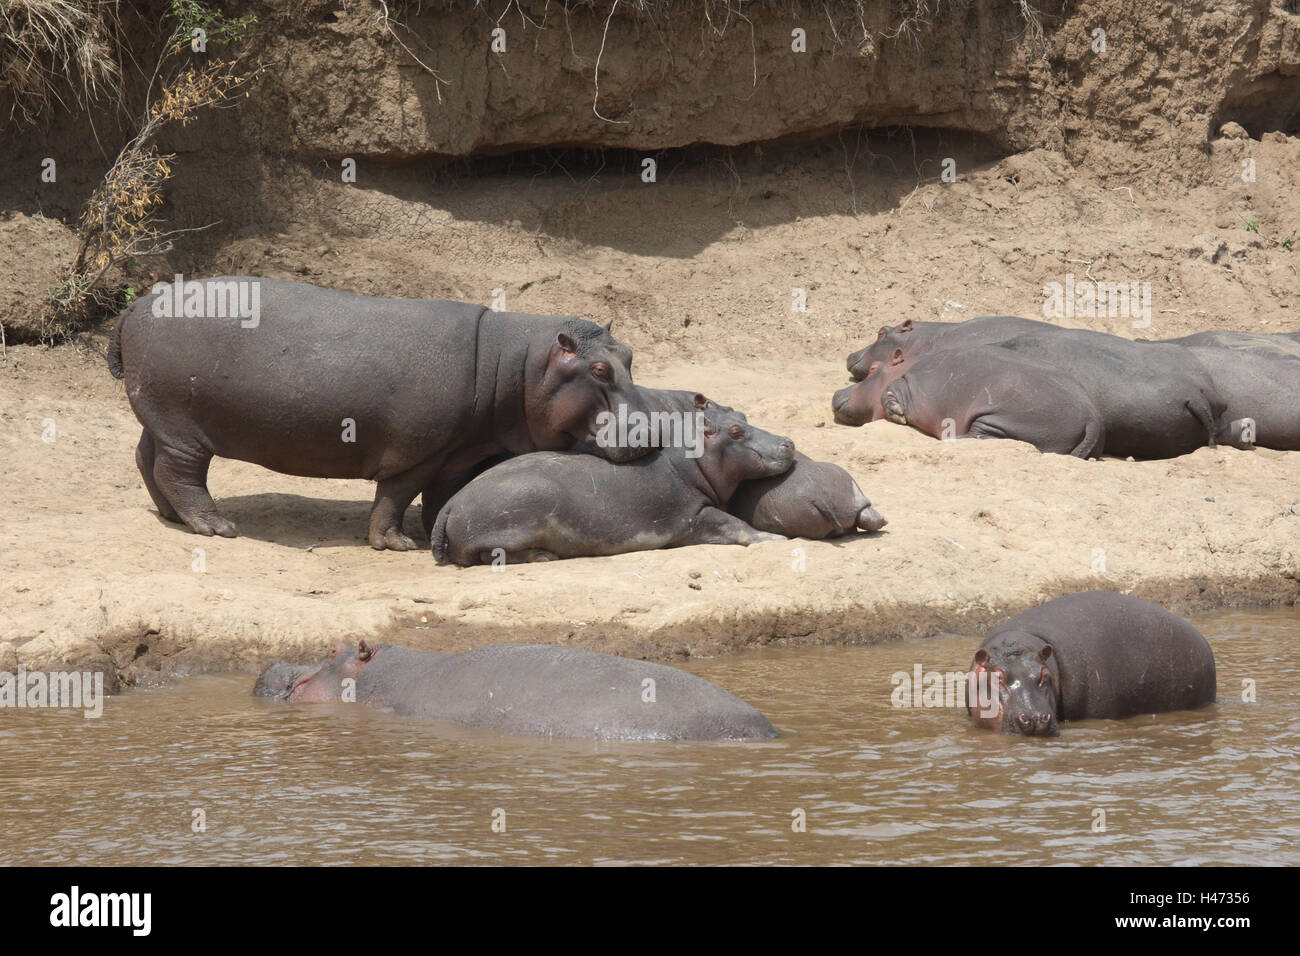 Hippopotami lie on the shore, Stock Photo